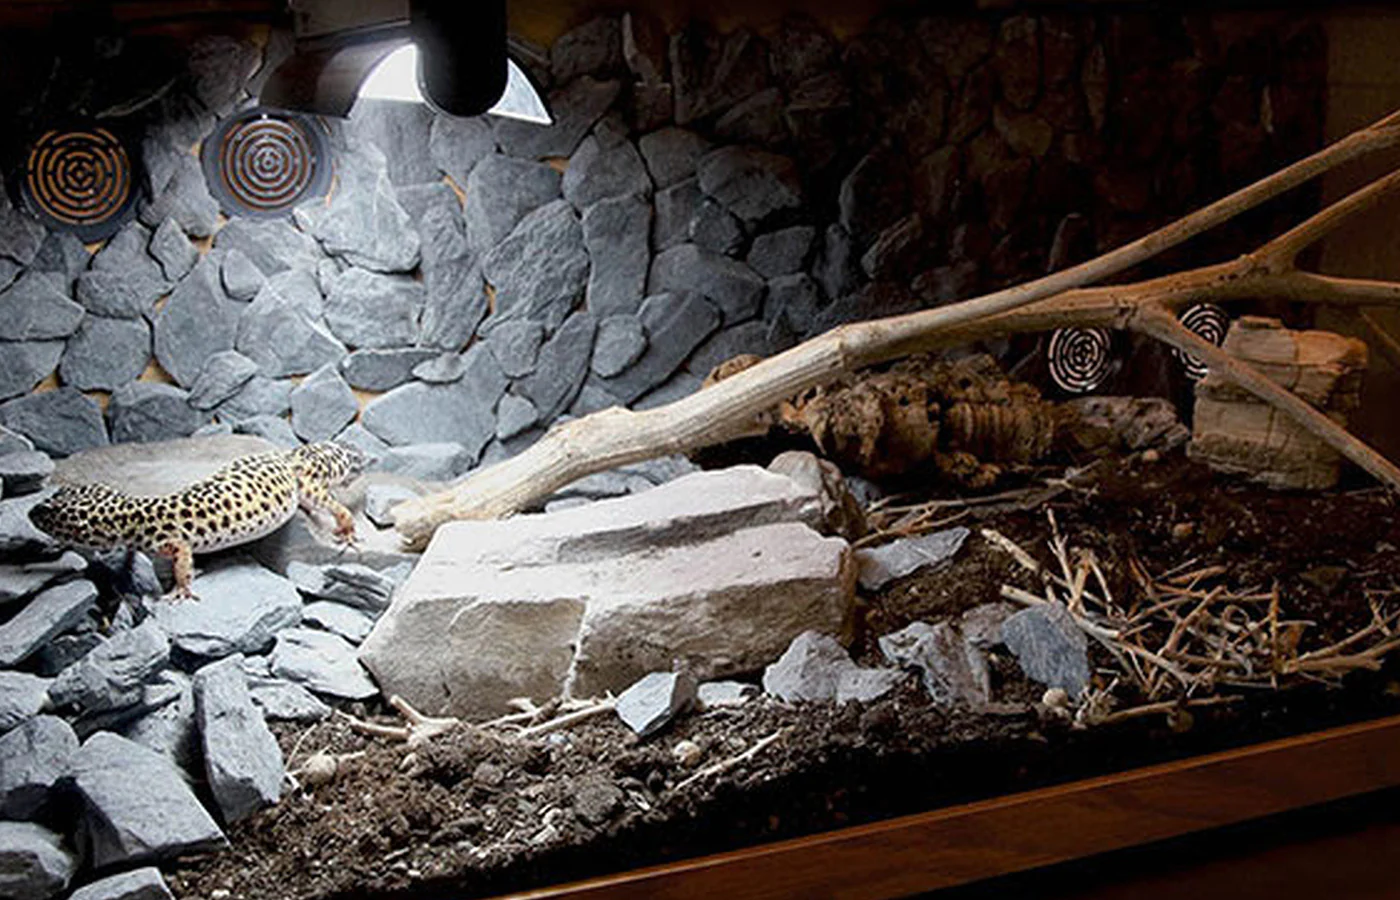 Supplying light to Leopard geckos